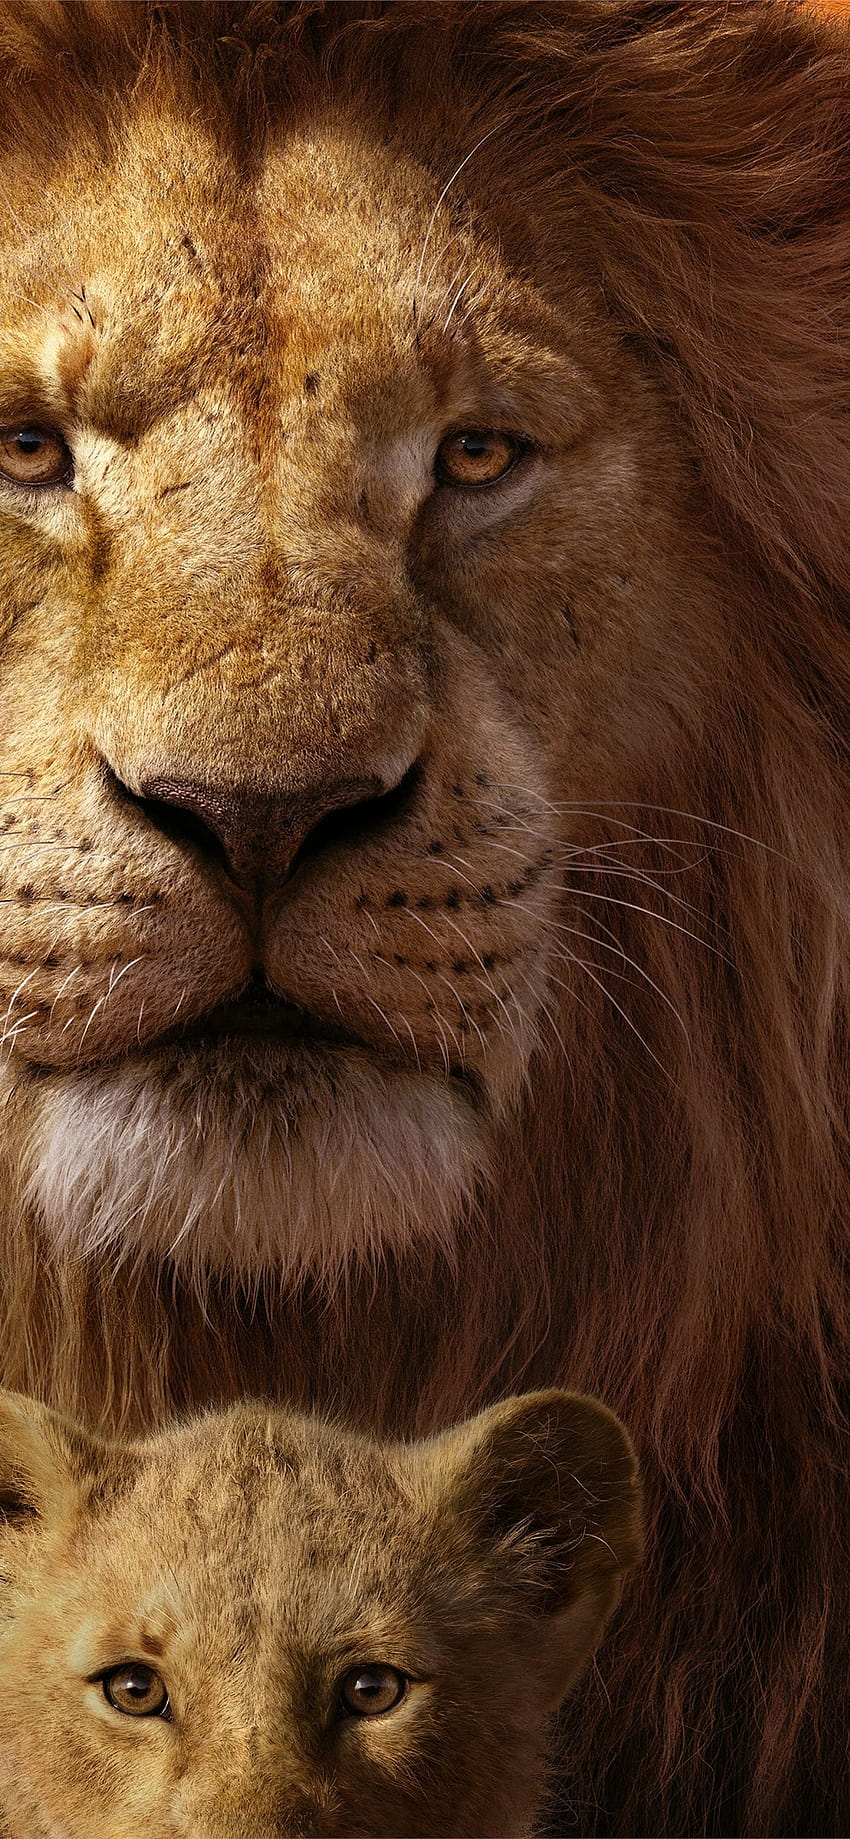 The Lion King 2019 Mufasa Simba Lion King 2019 ... iPhone wallpaper ponsel HD